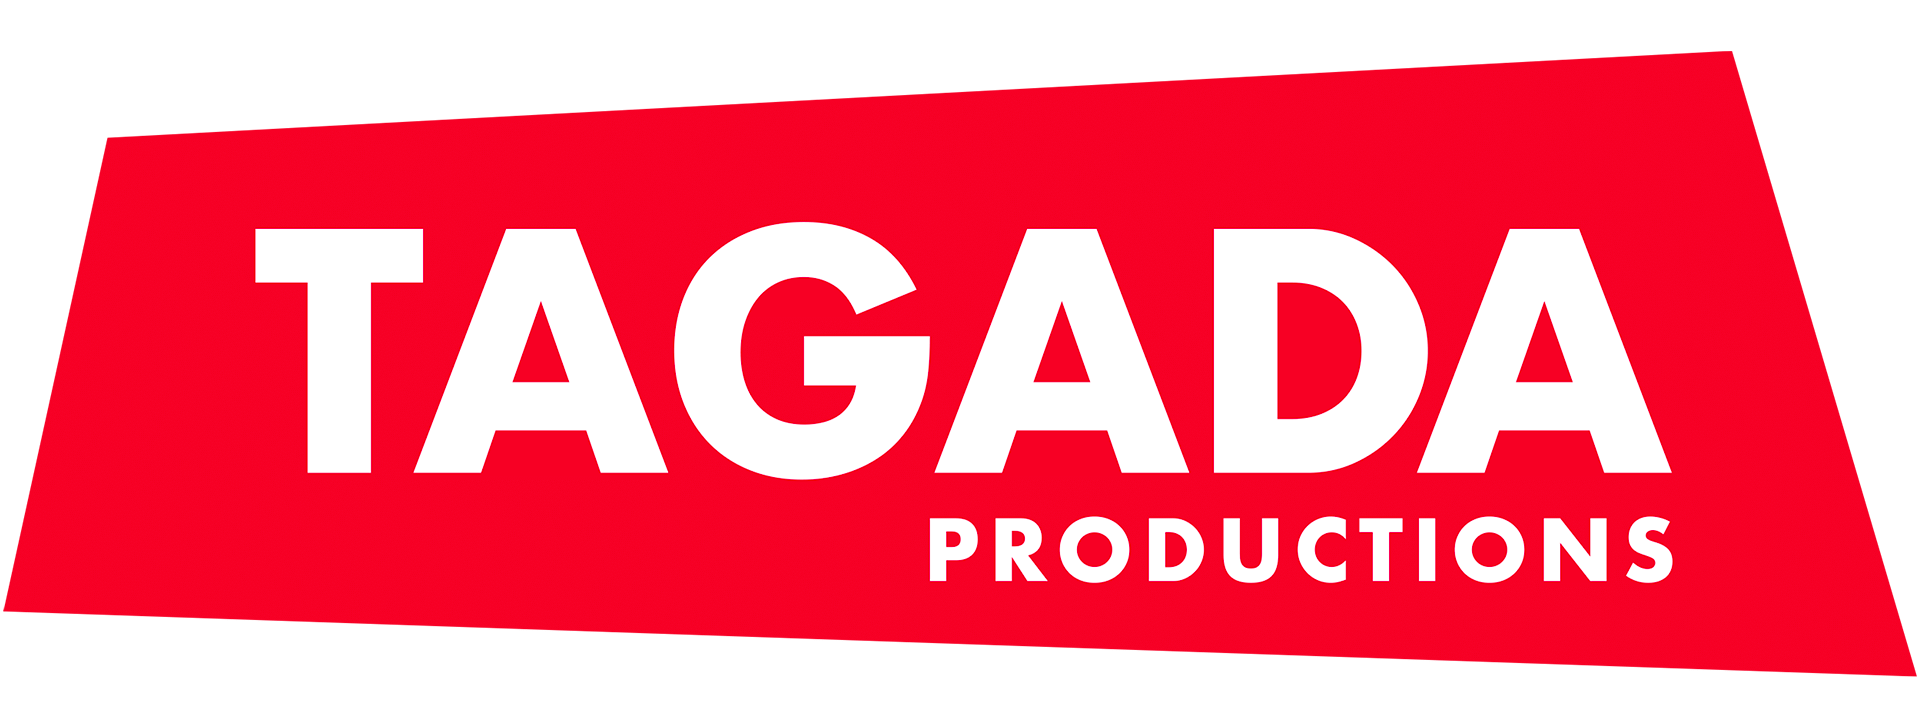 Tagada Productions